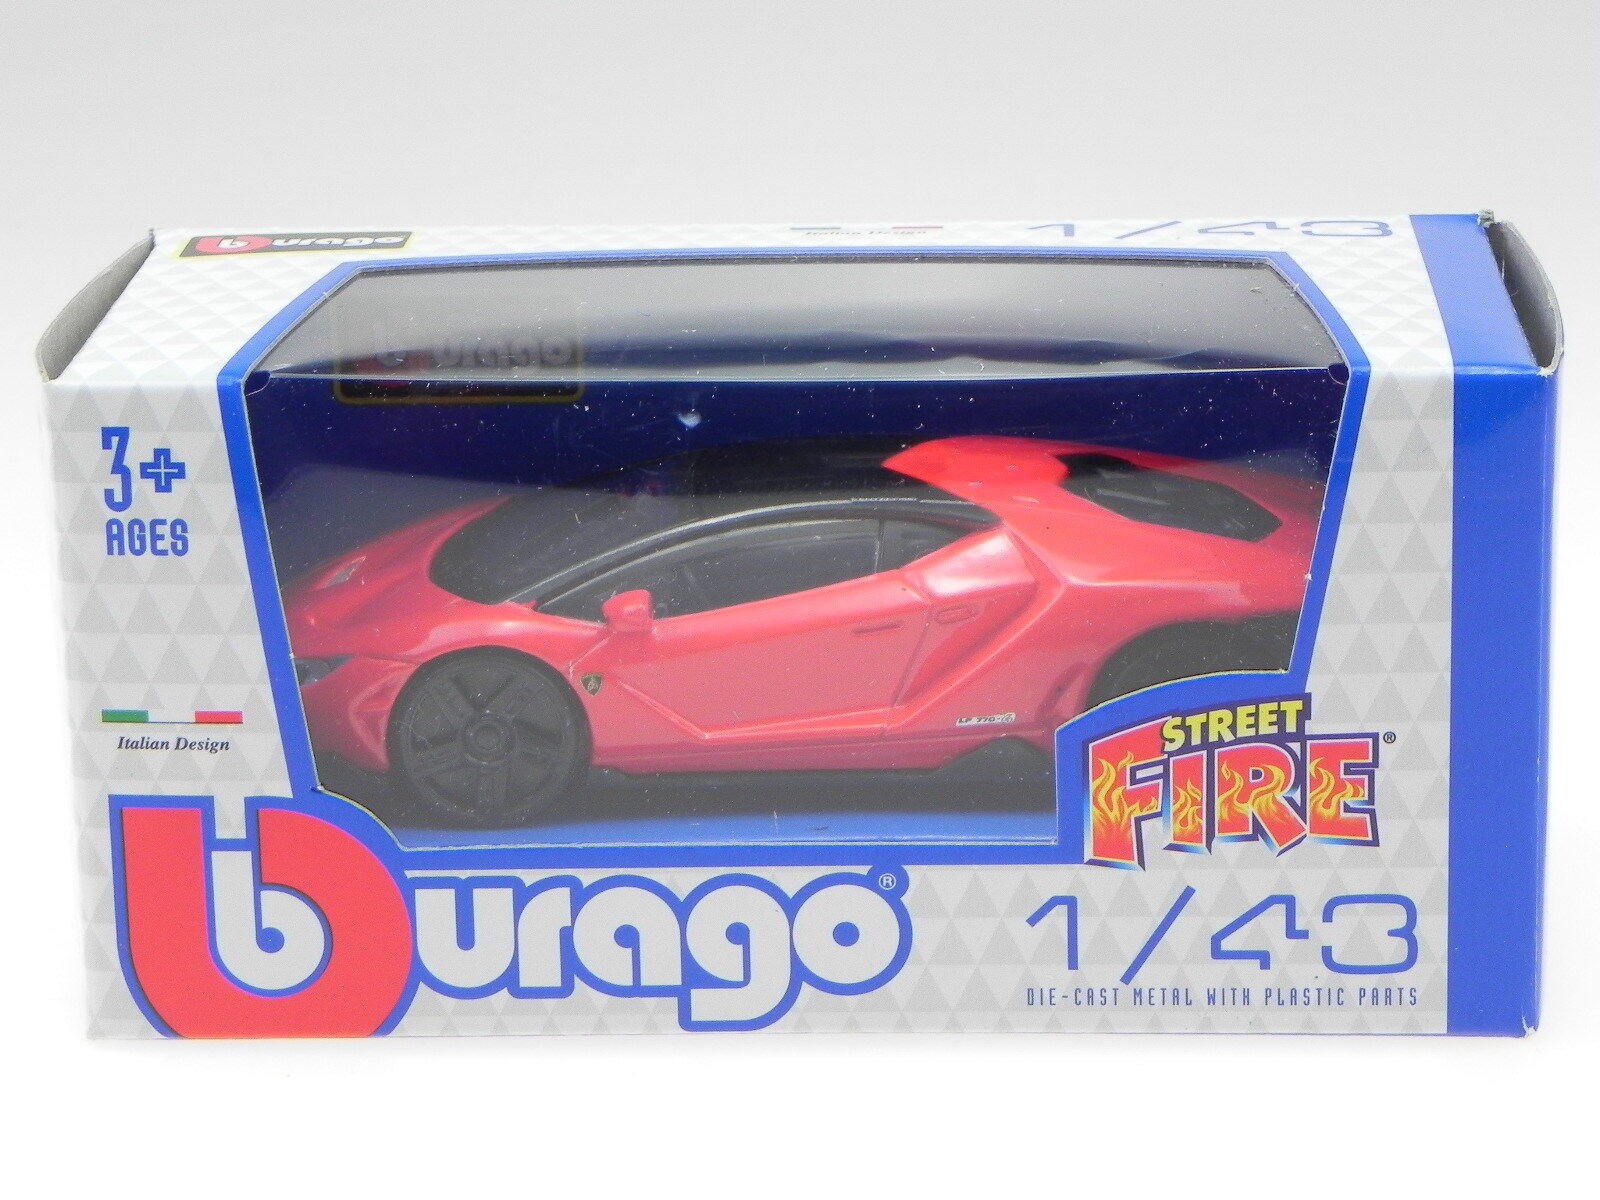 18-30397 - Bburago STREET FIRE - 1:43 - modello a scelta